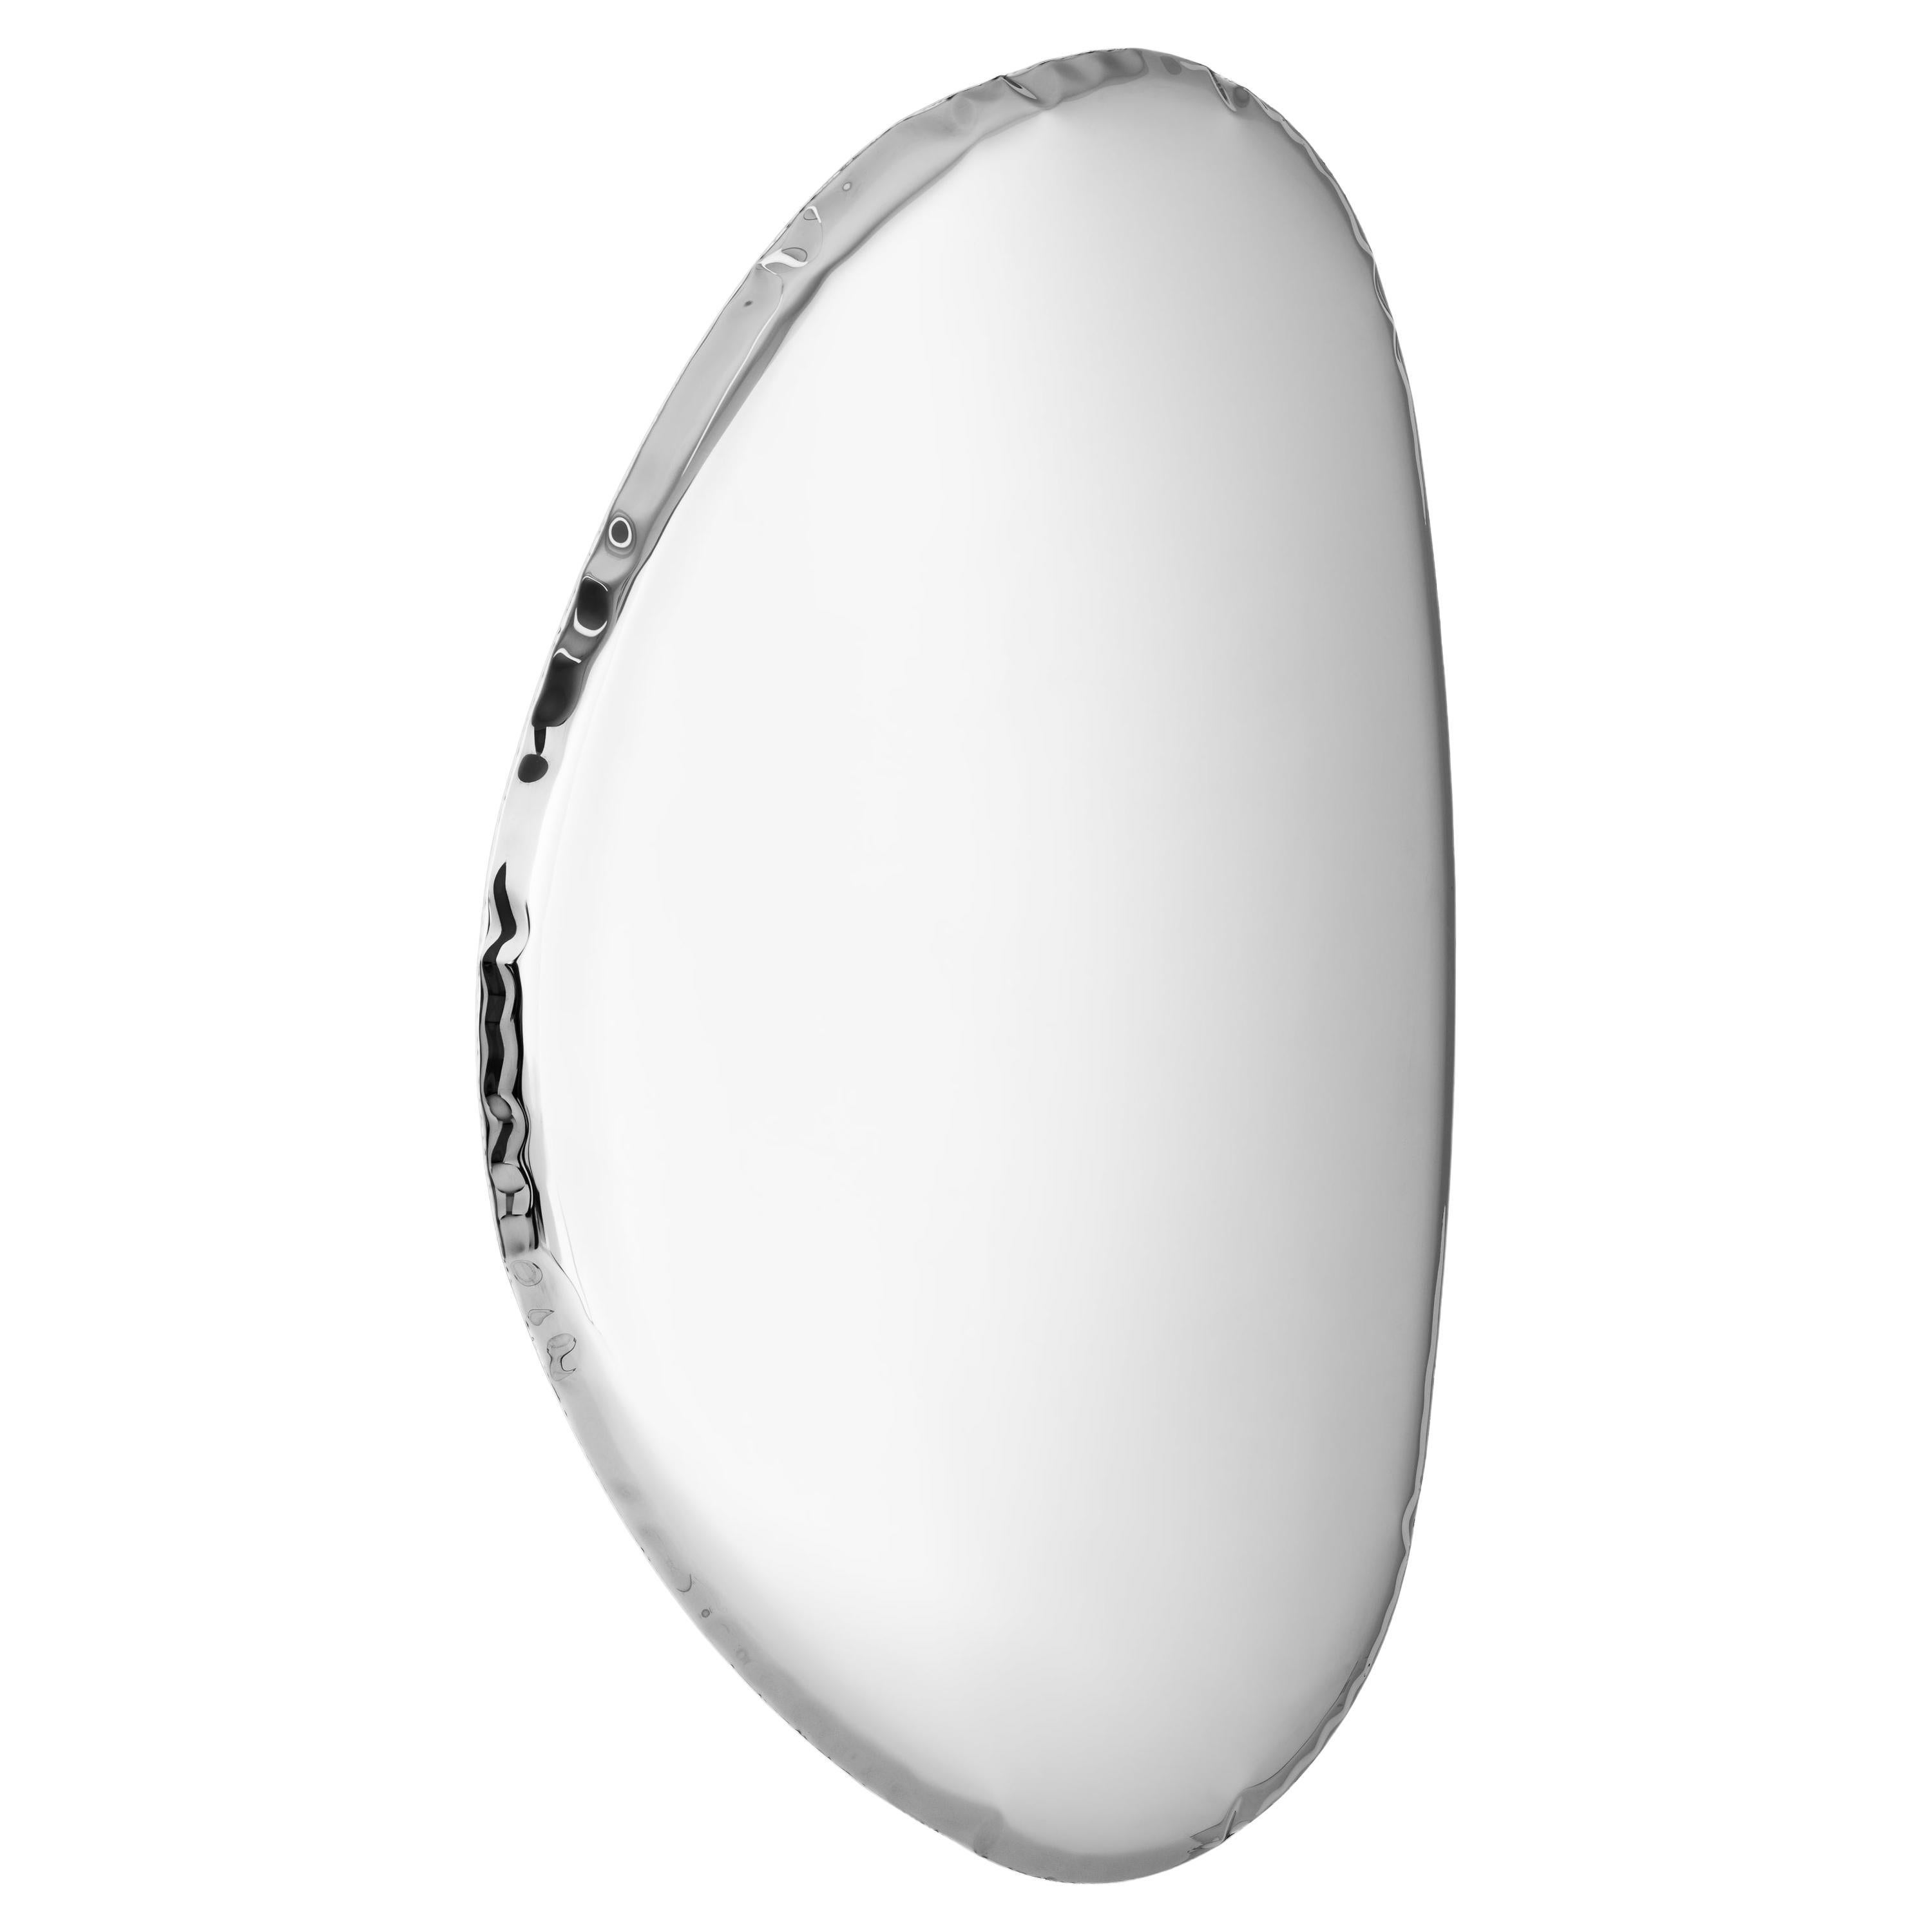 Tafla O2 Polished Stainless Steel Wall Mirror by Zieta